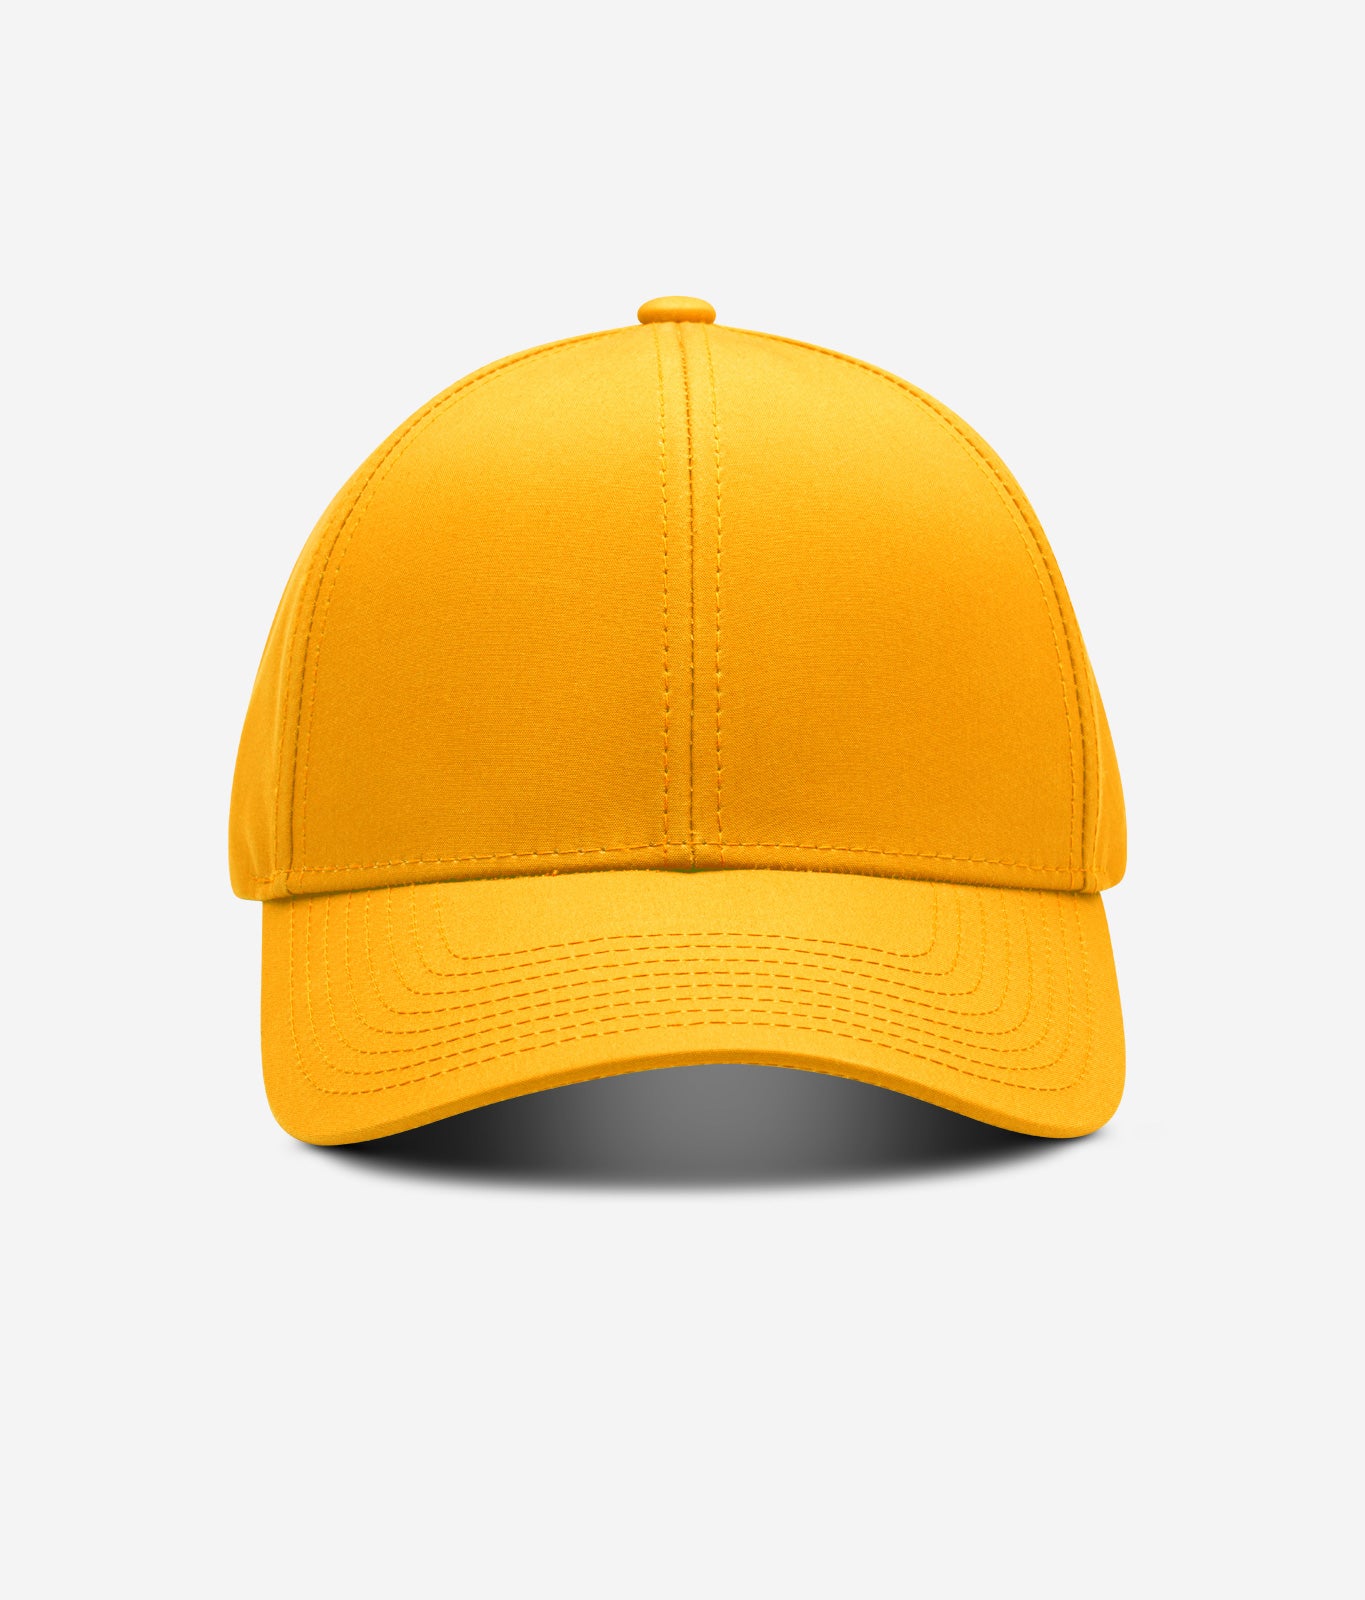 Stiksen 107 Ventile Yellow Baseball Cap Front